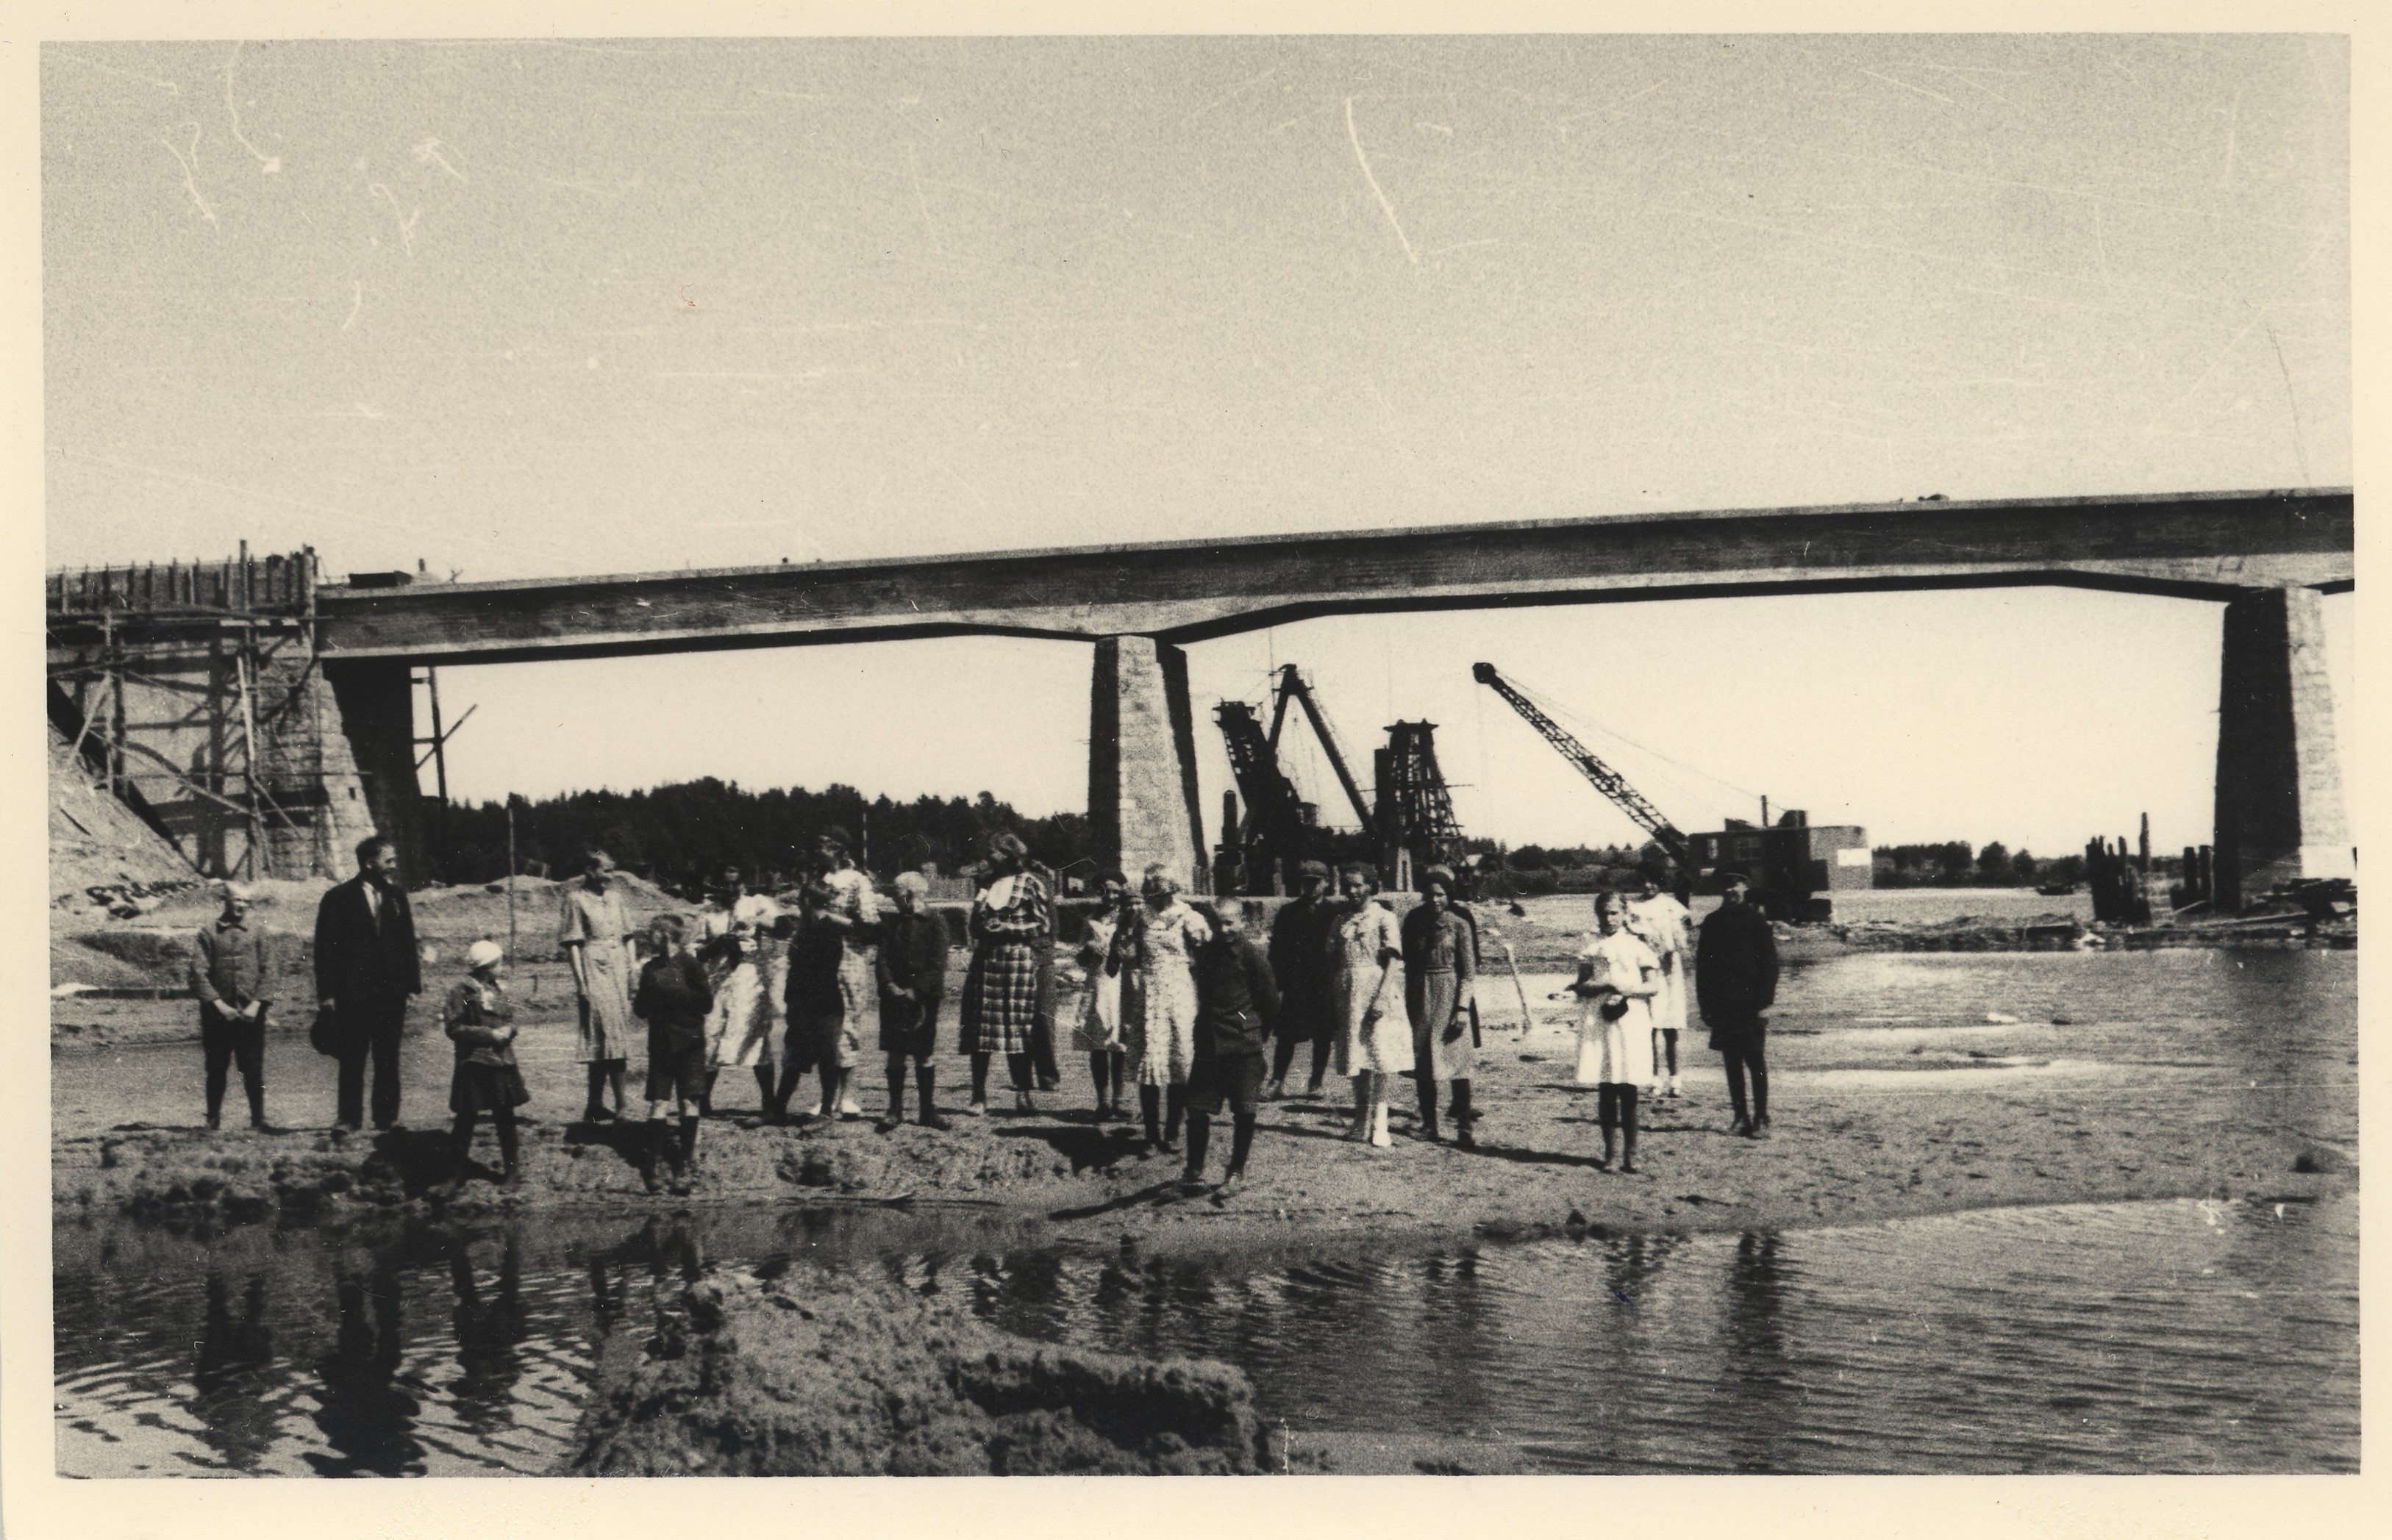 Construction of the Luunja Bridge